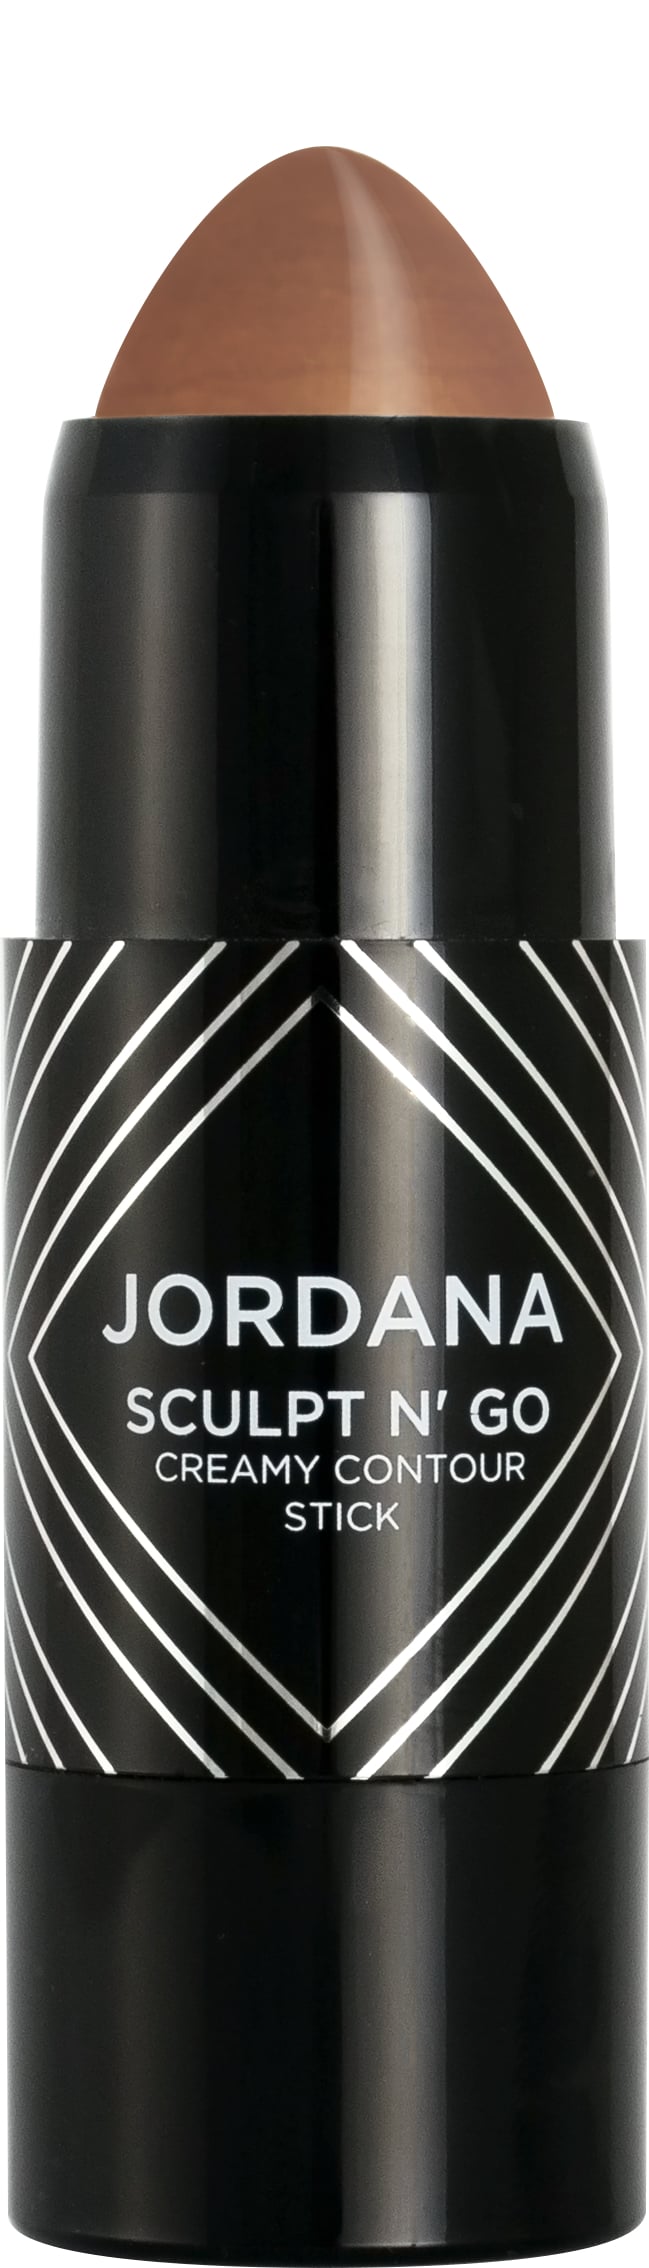 Jordana Sculpt N' Go Creamy Contour Stick